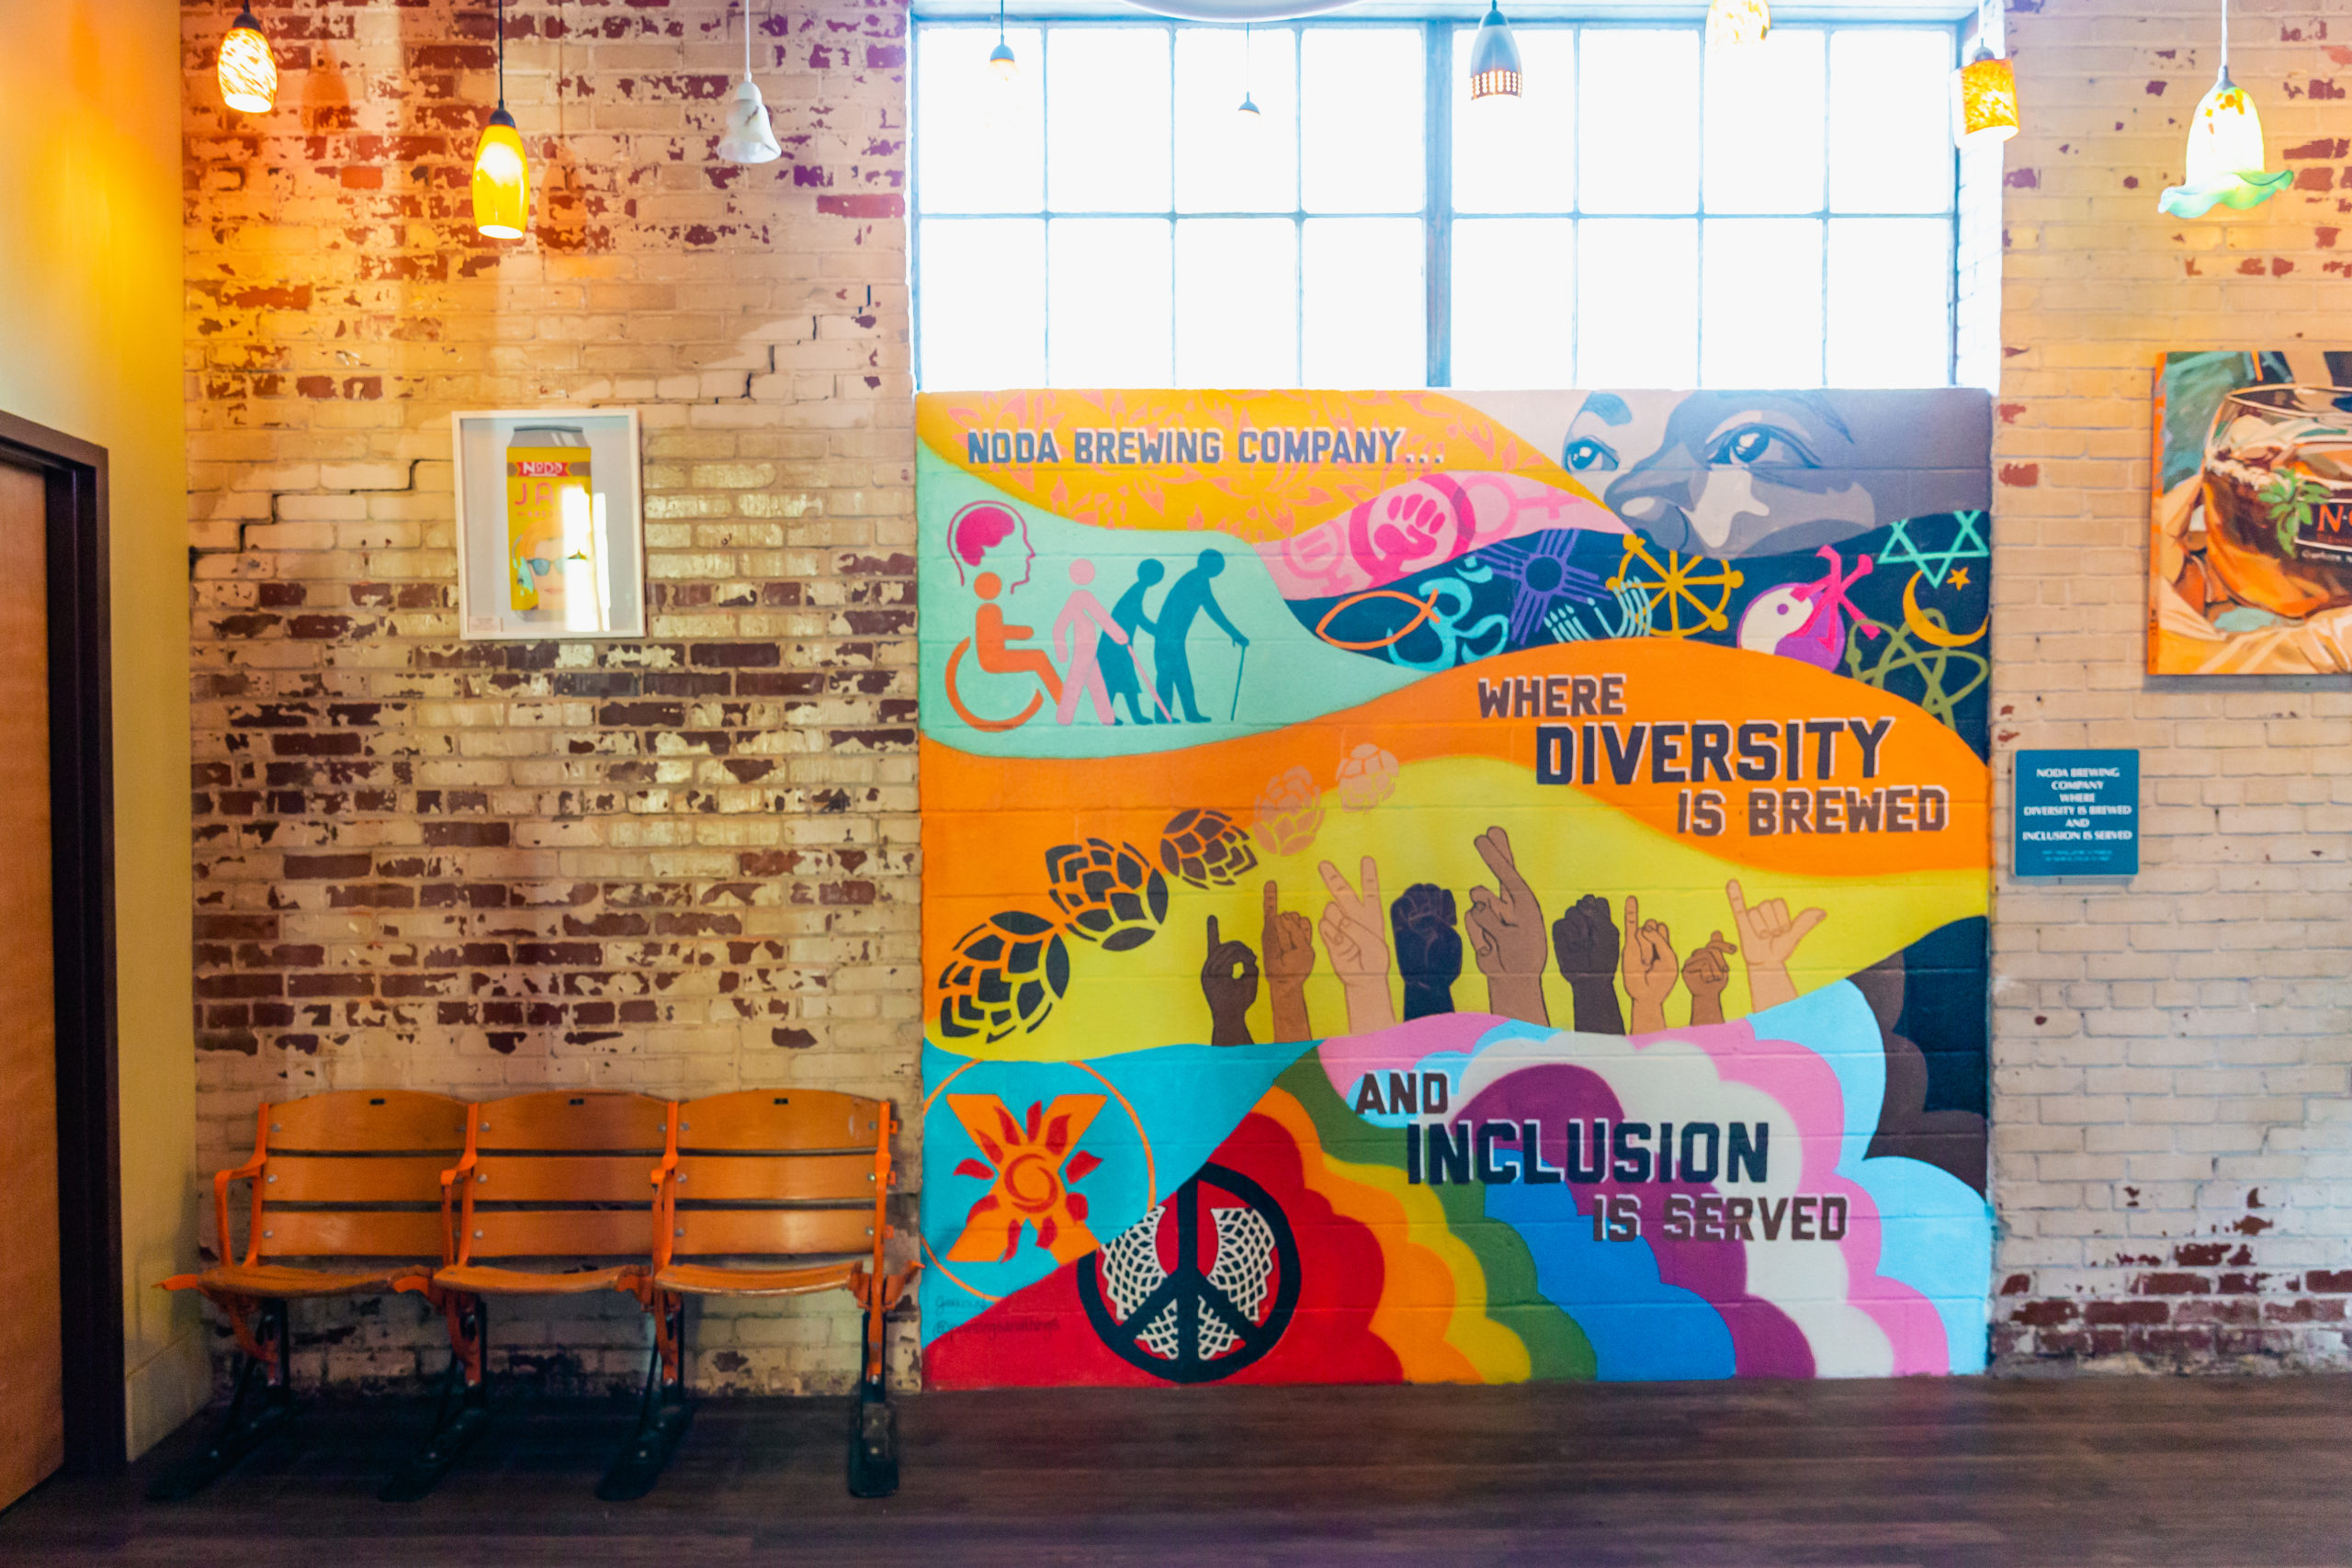 Wall art celebrating inclusivity and diversity